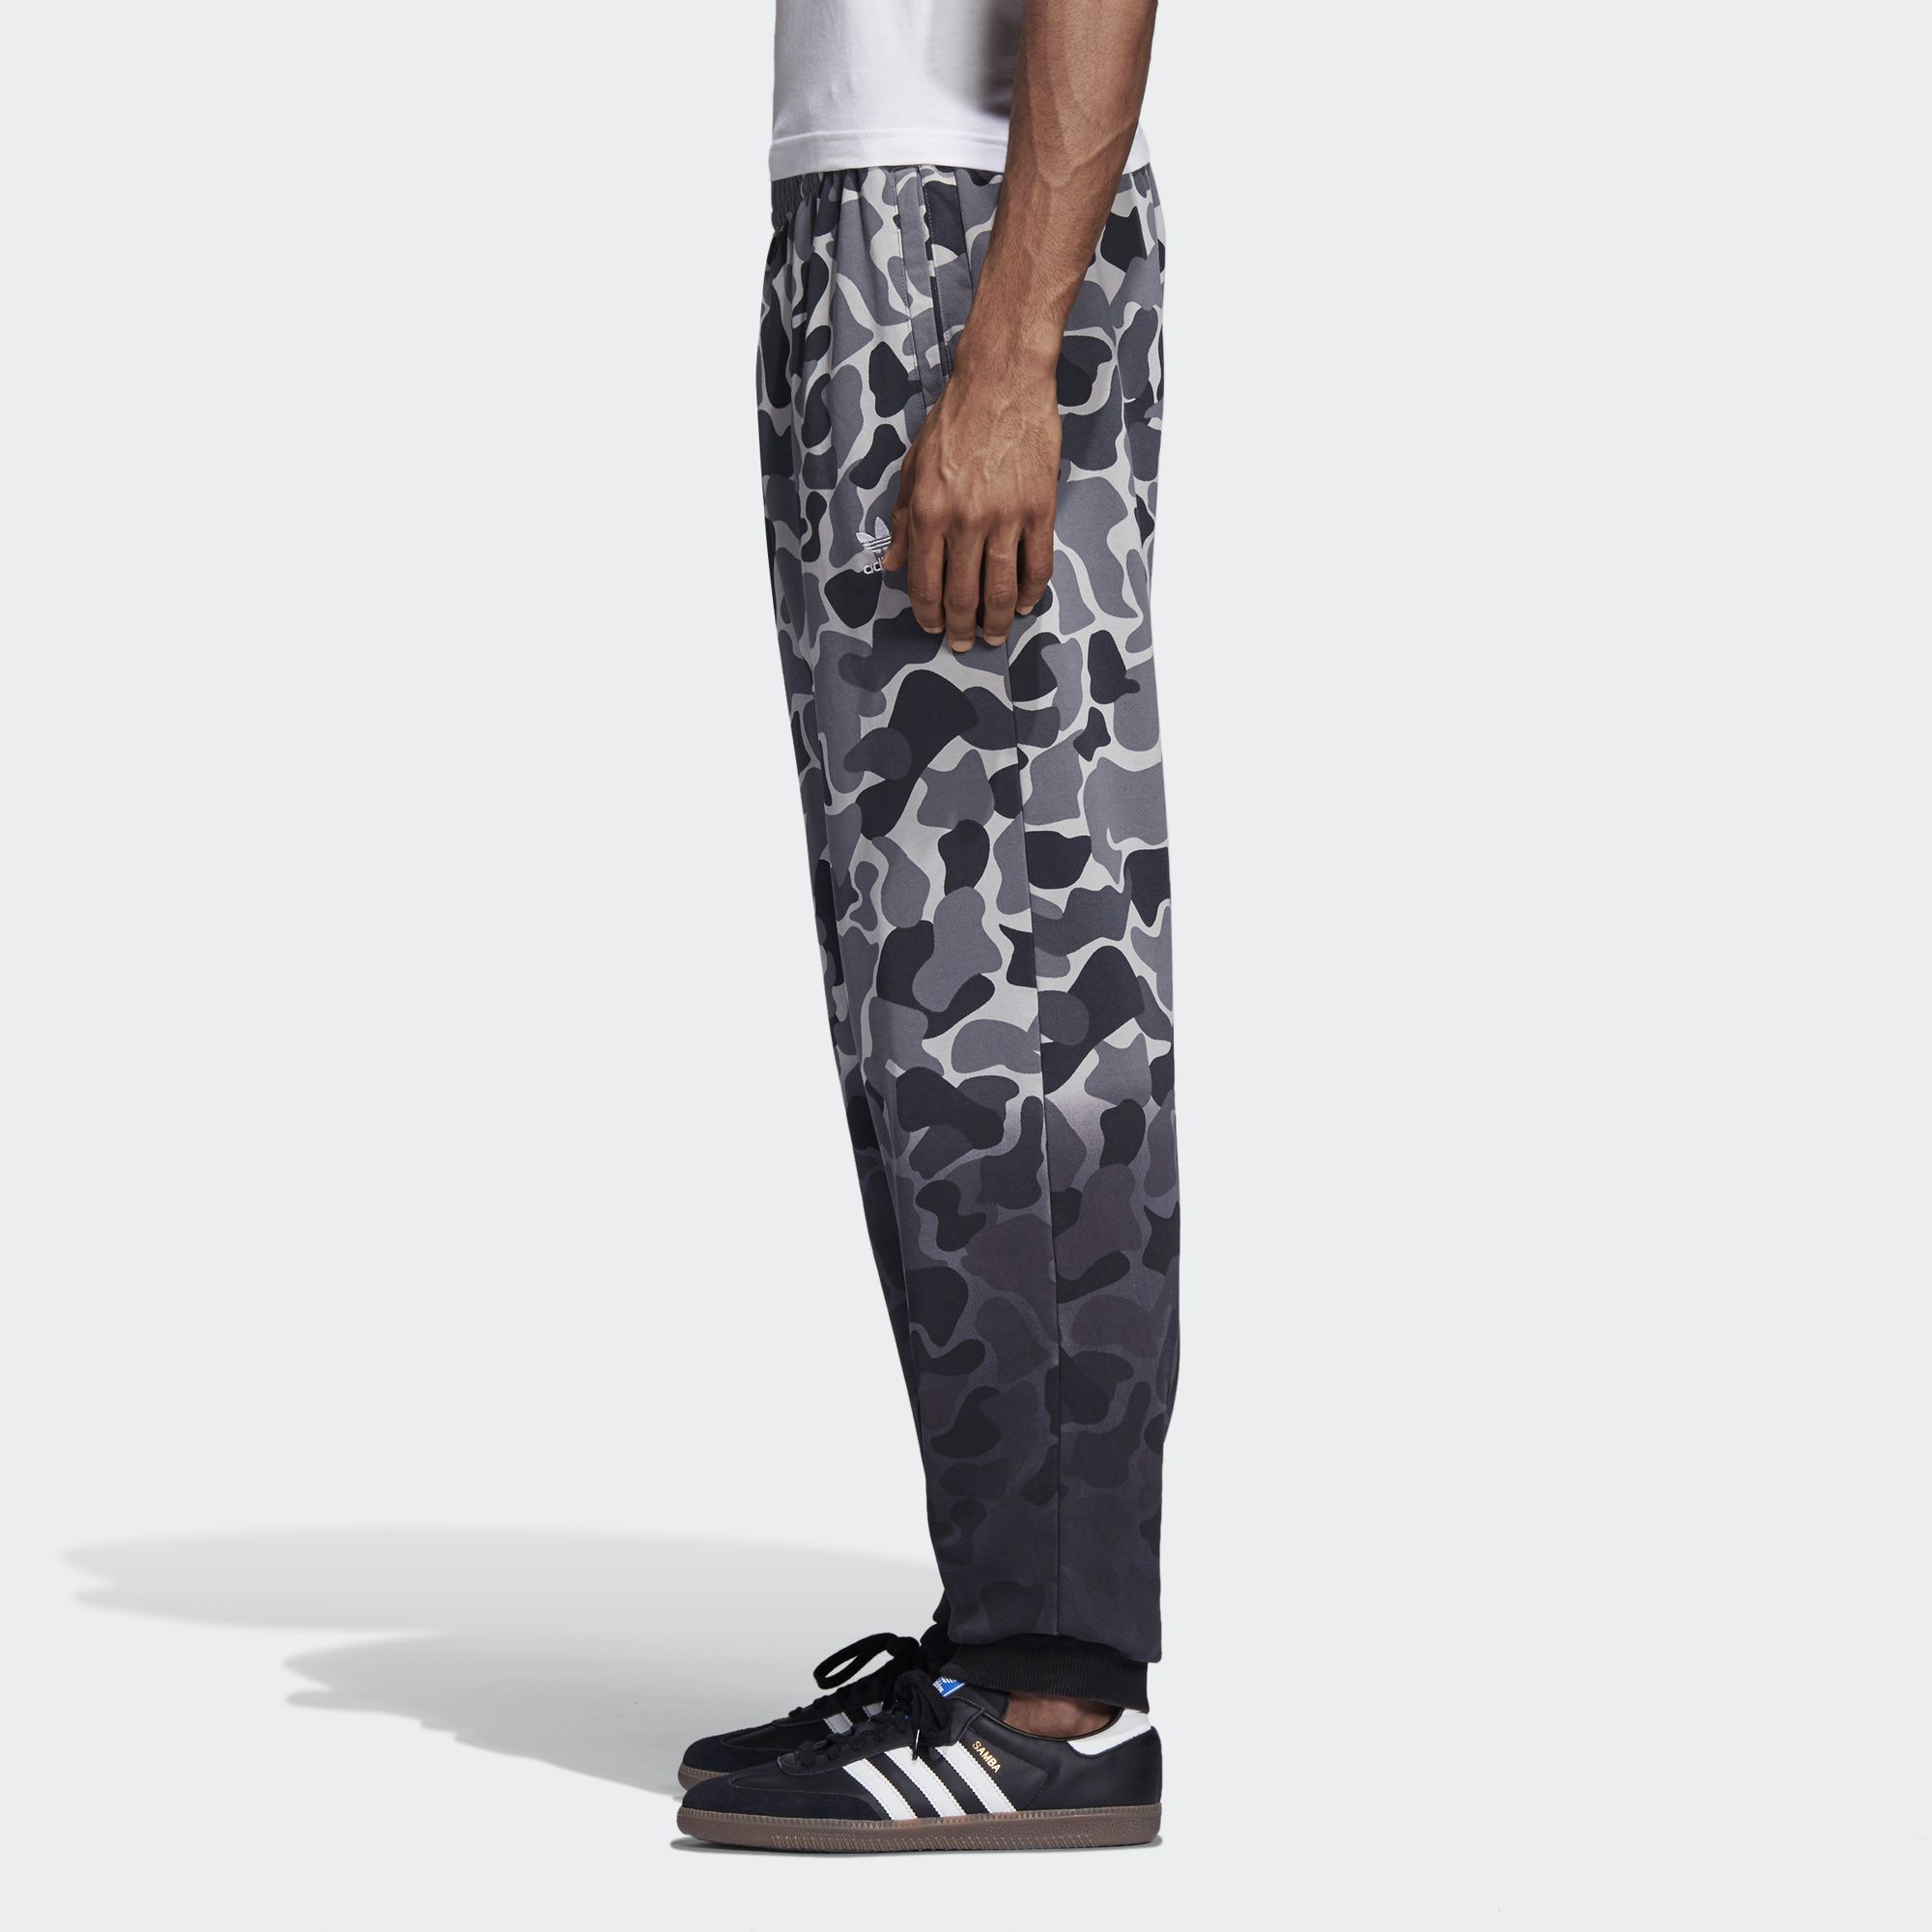 Adidas Men's Originals Camouflage Dip-Dyed Pants Gray Camo-Black dh4808